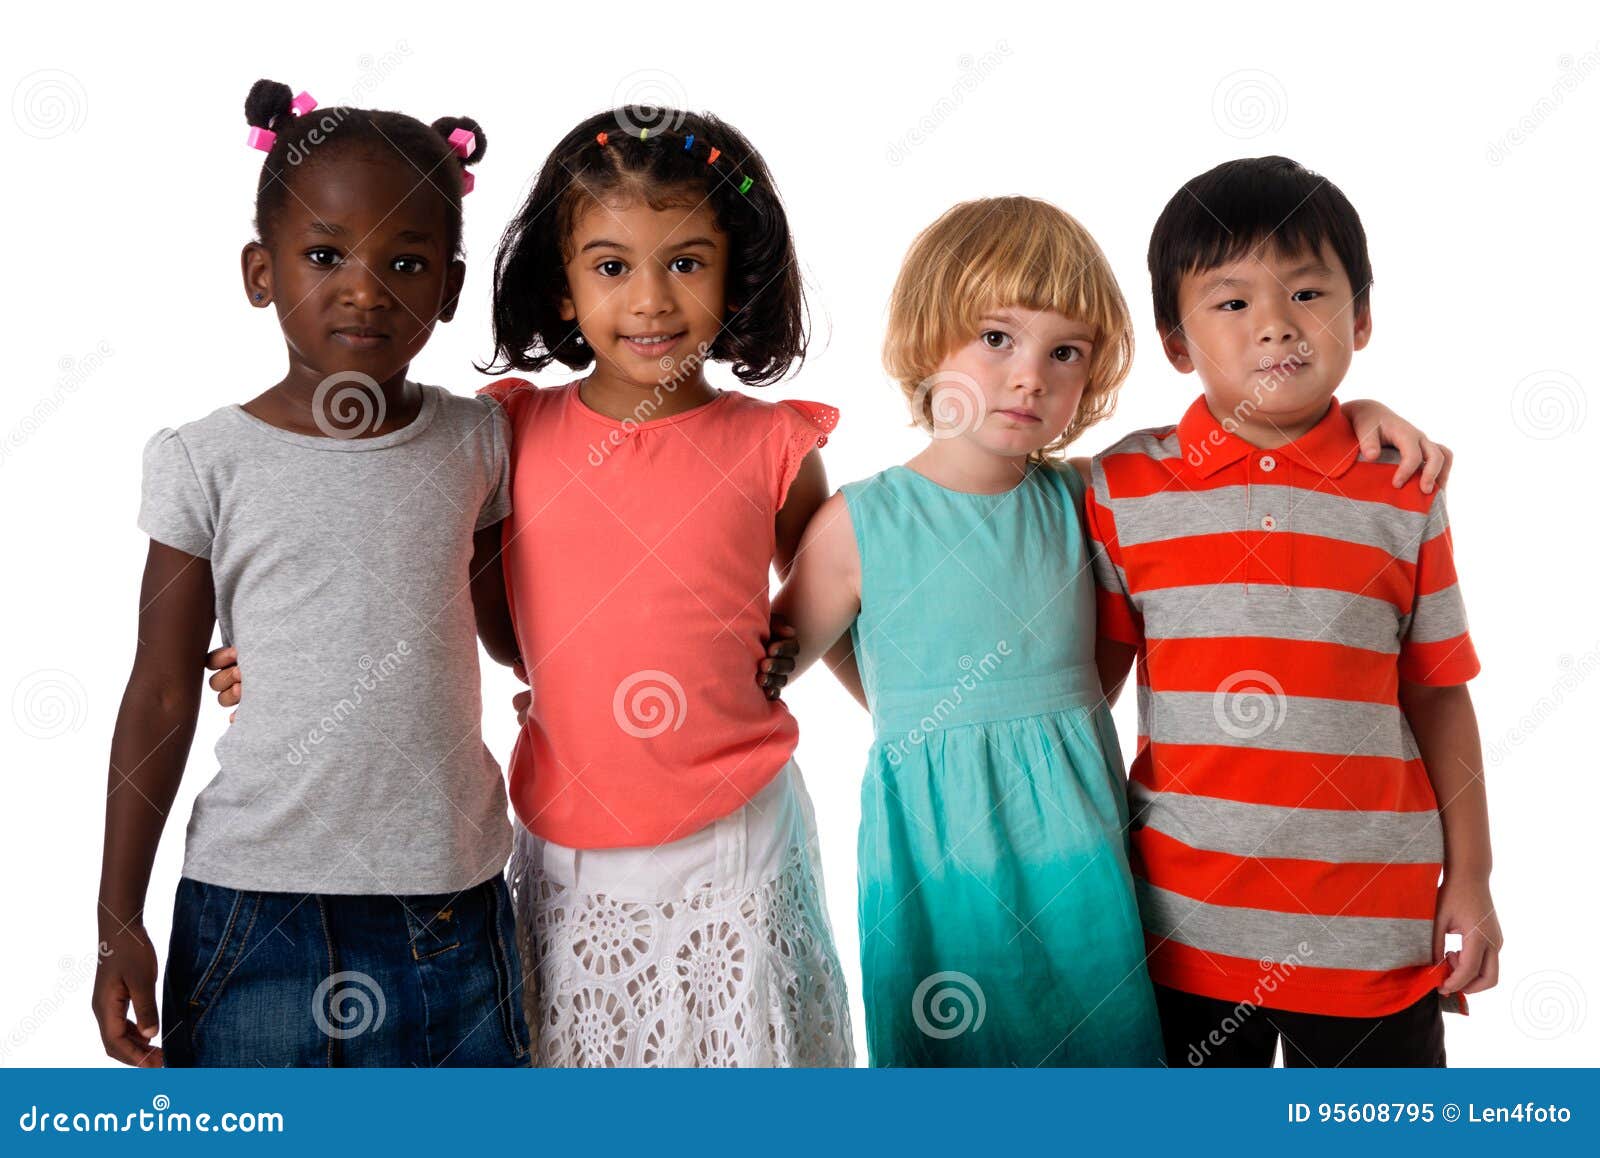 group of multiracial kids portrait in studio.